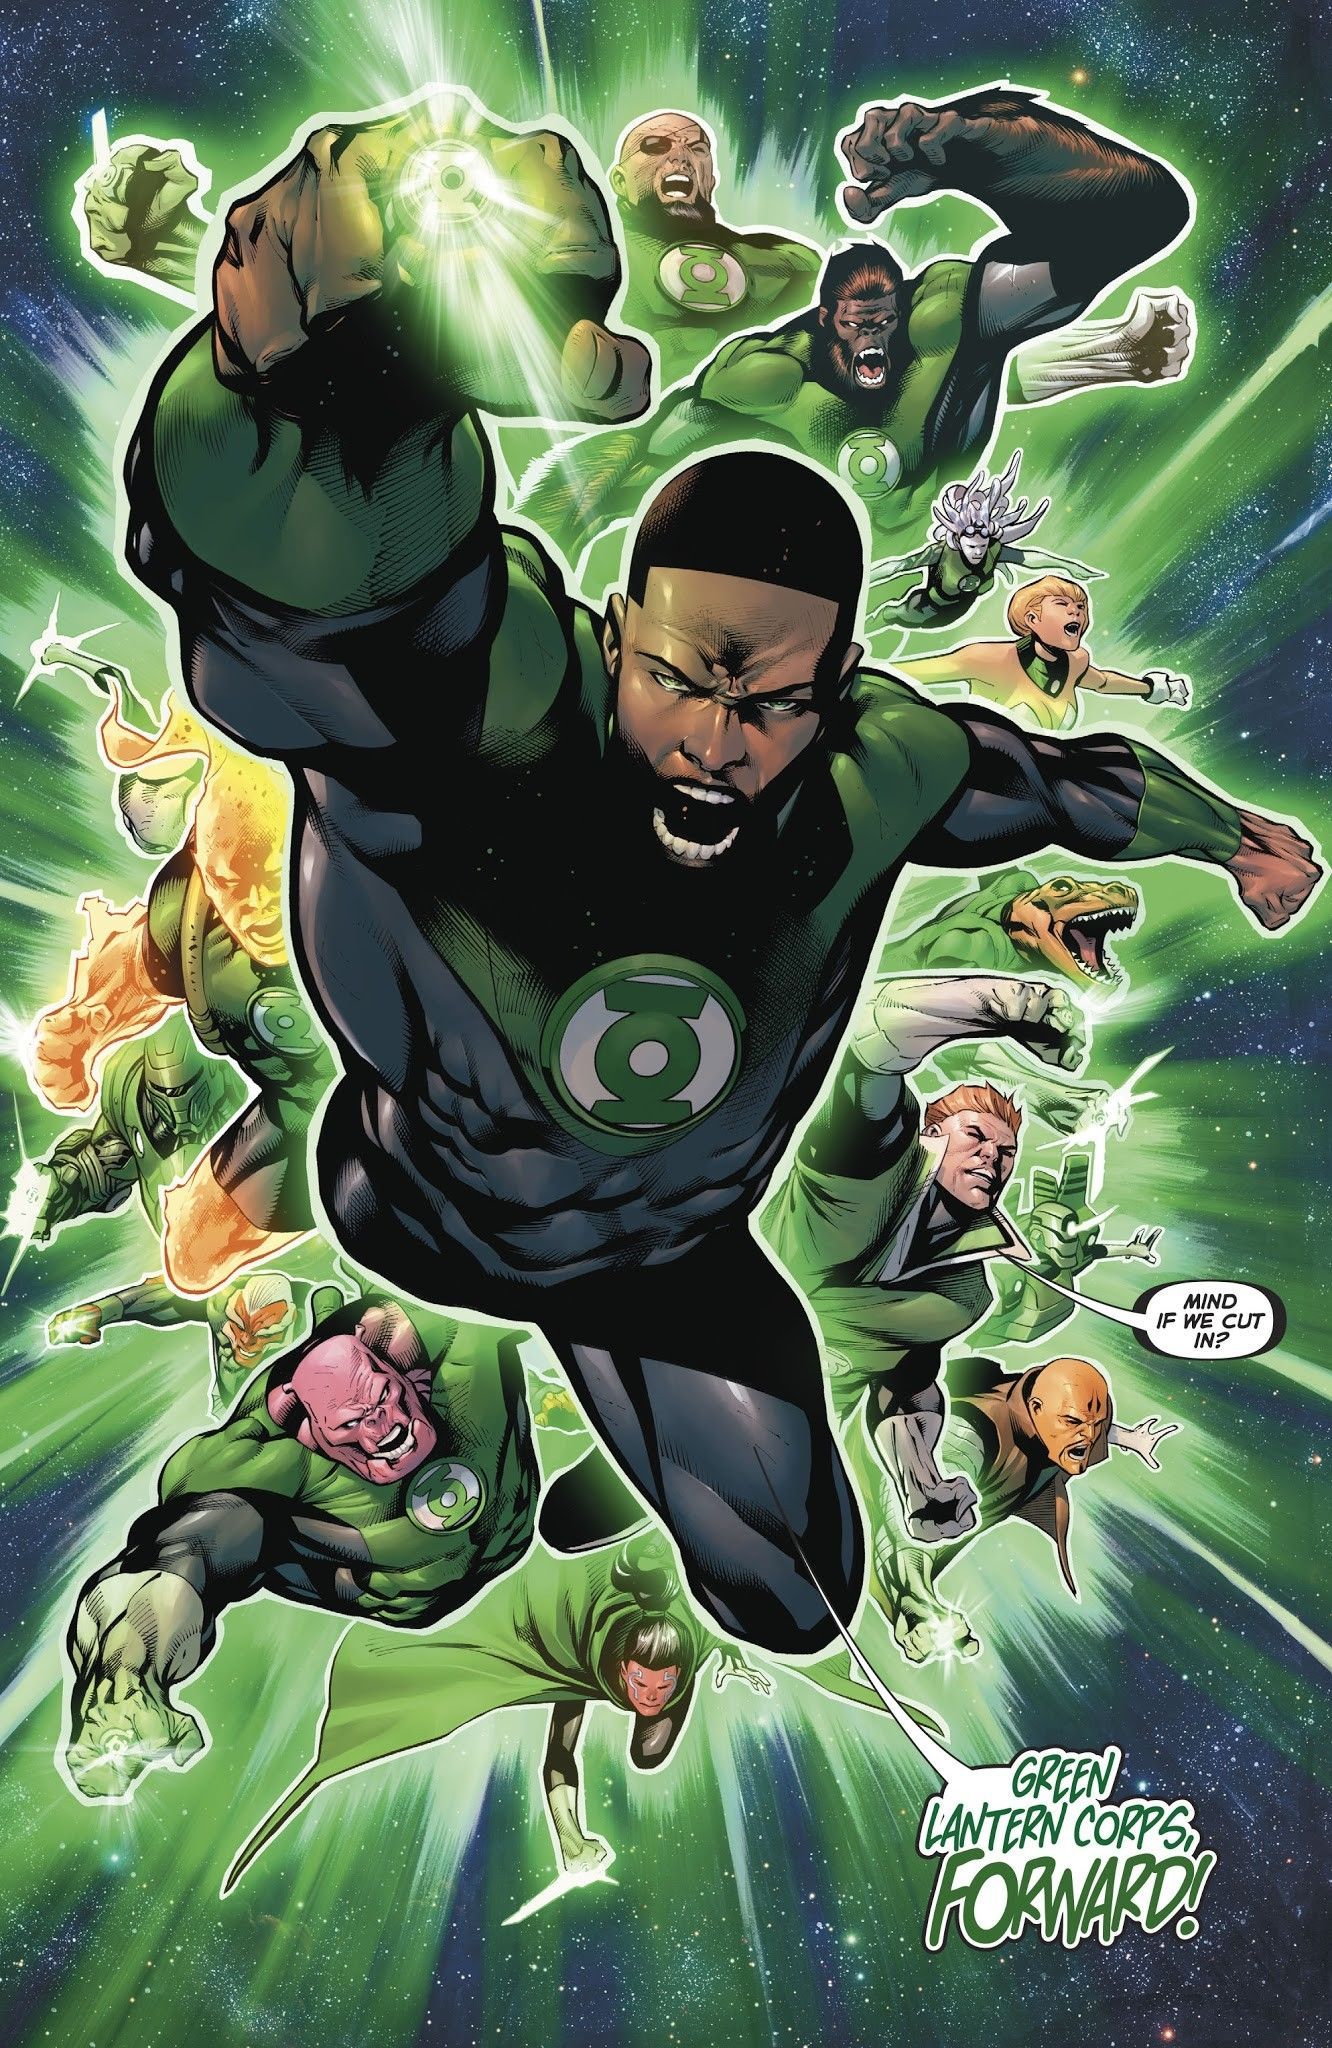 Pin By Sebastian Hernandez On Comics DC. Green Lantern Corps, Green Lantern, Superhero Art